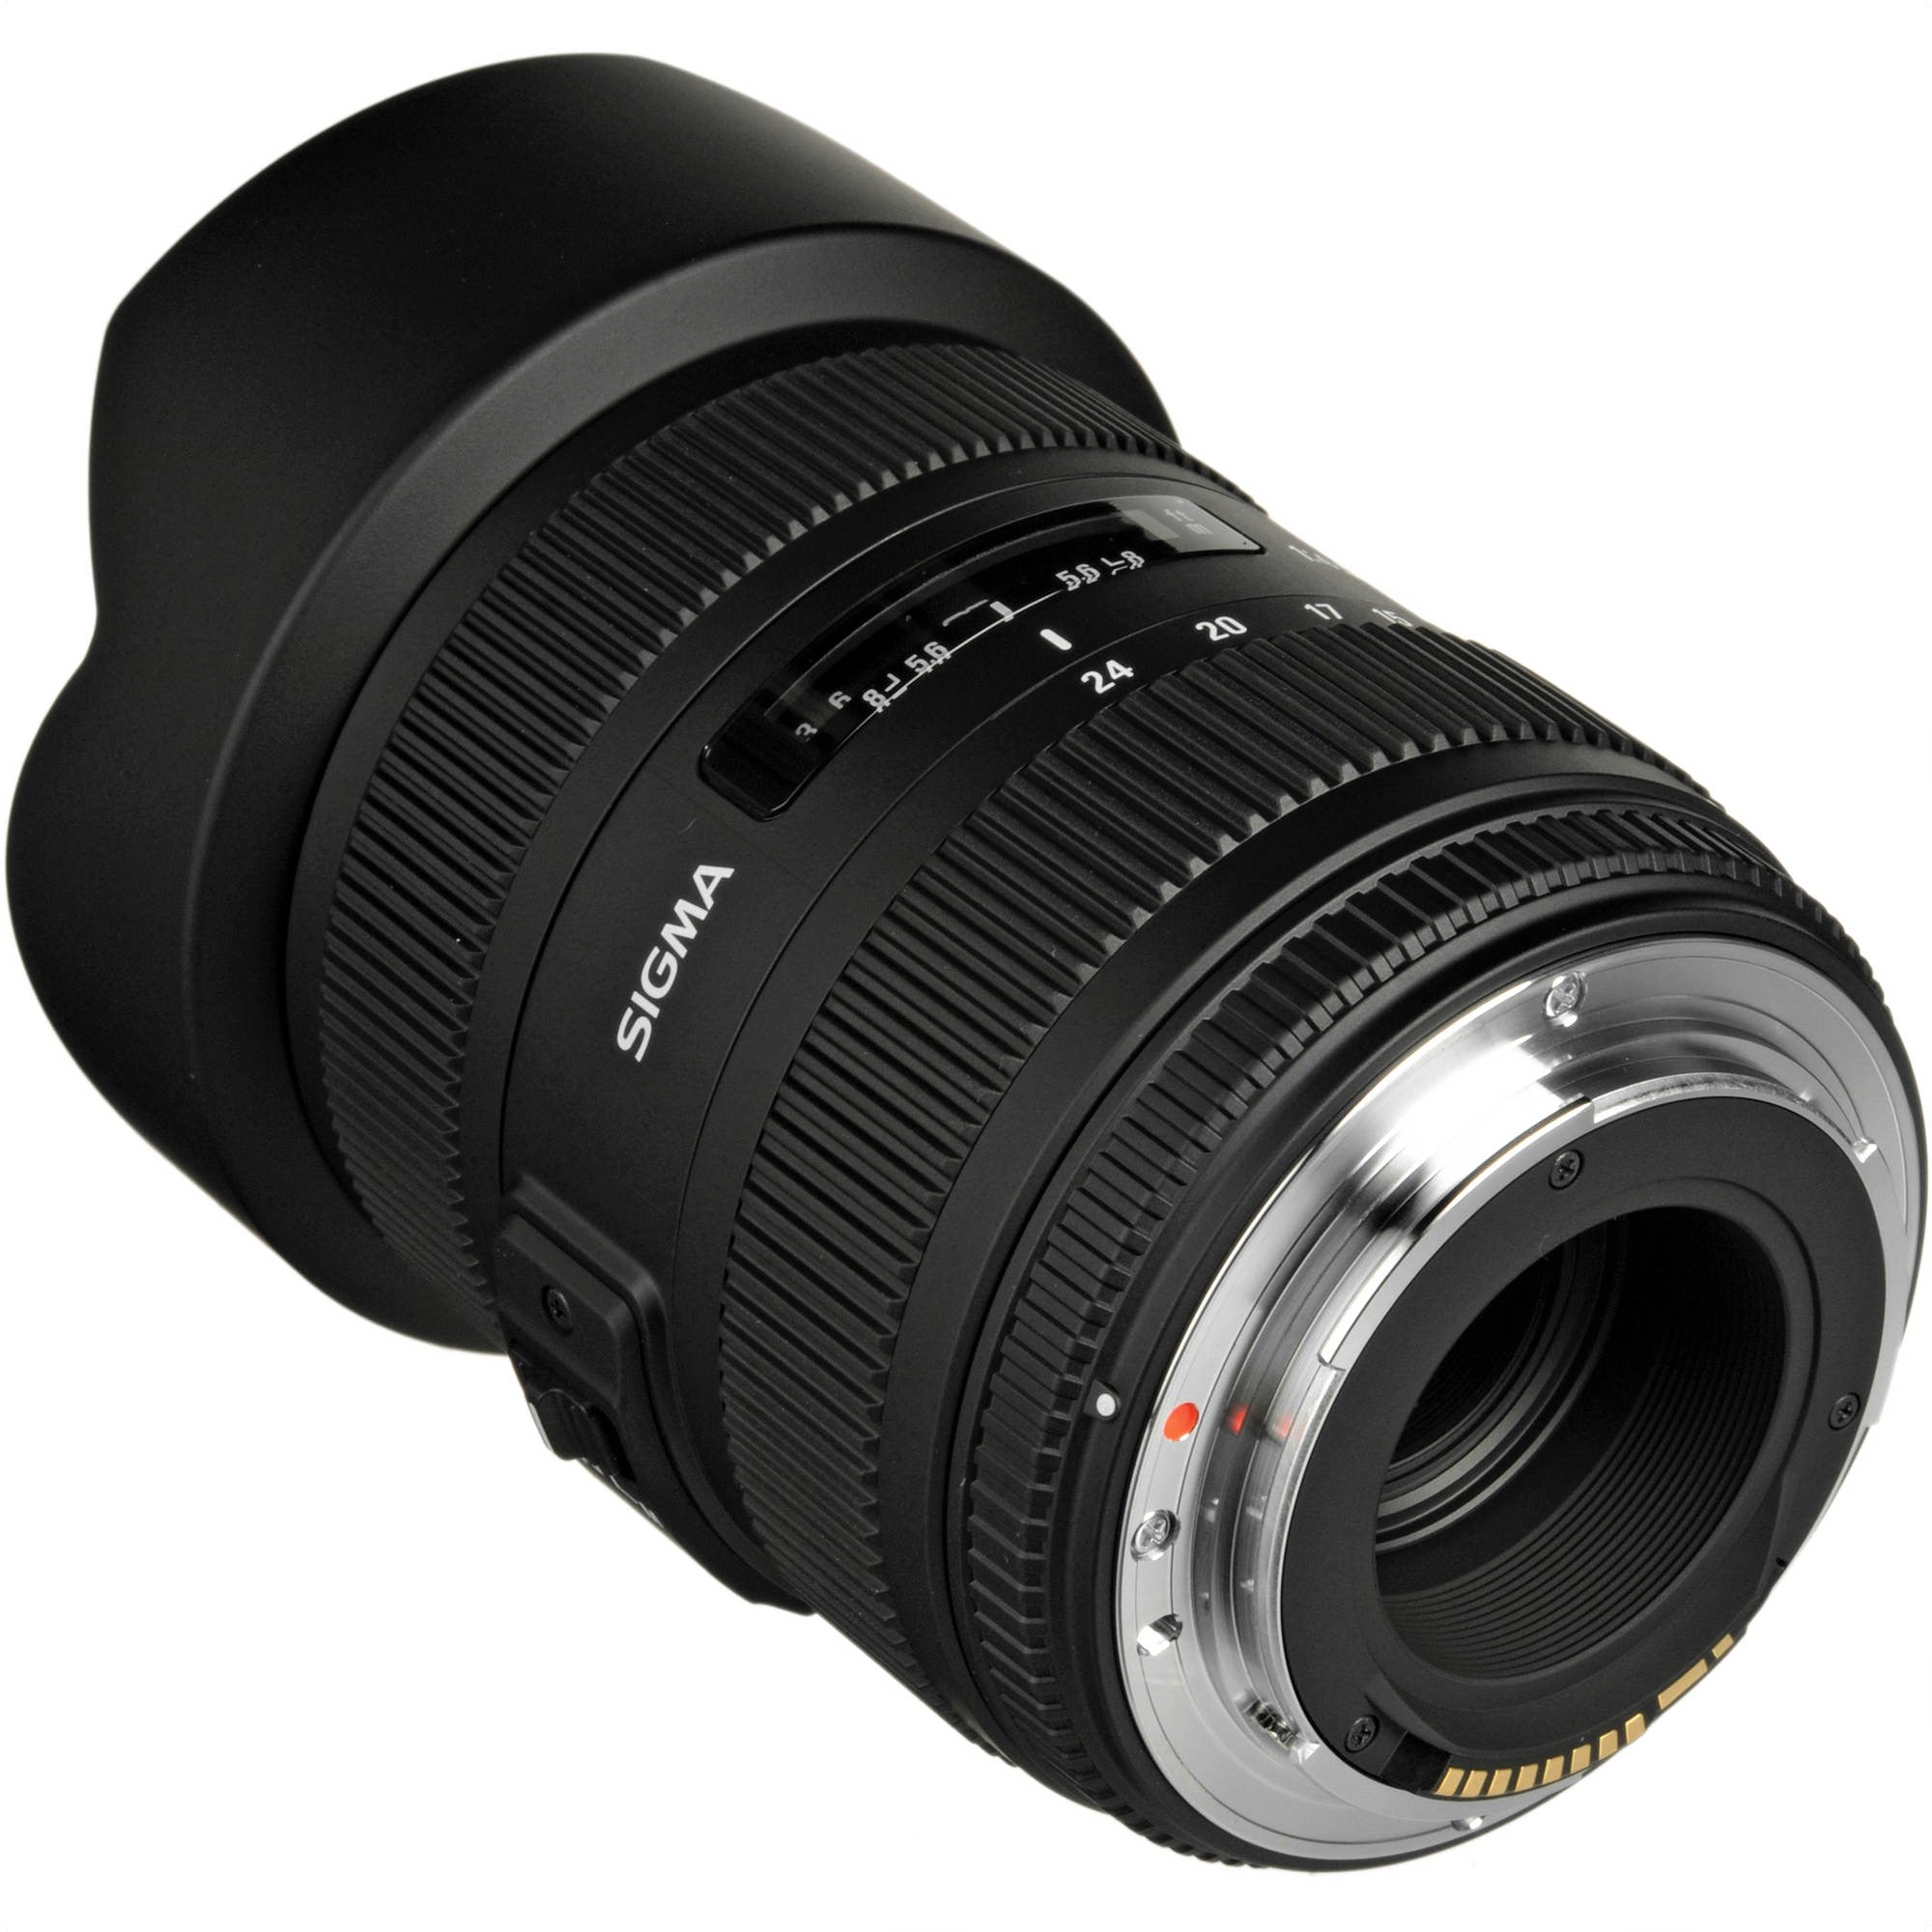 Sigma 12-24mm F4.5-5.6 II EX DG ASP-HSM Lens for Sigma